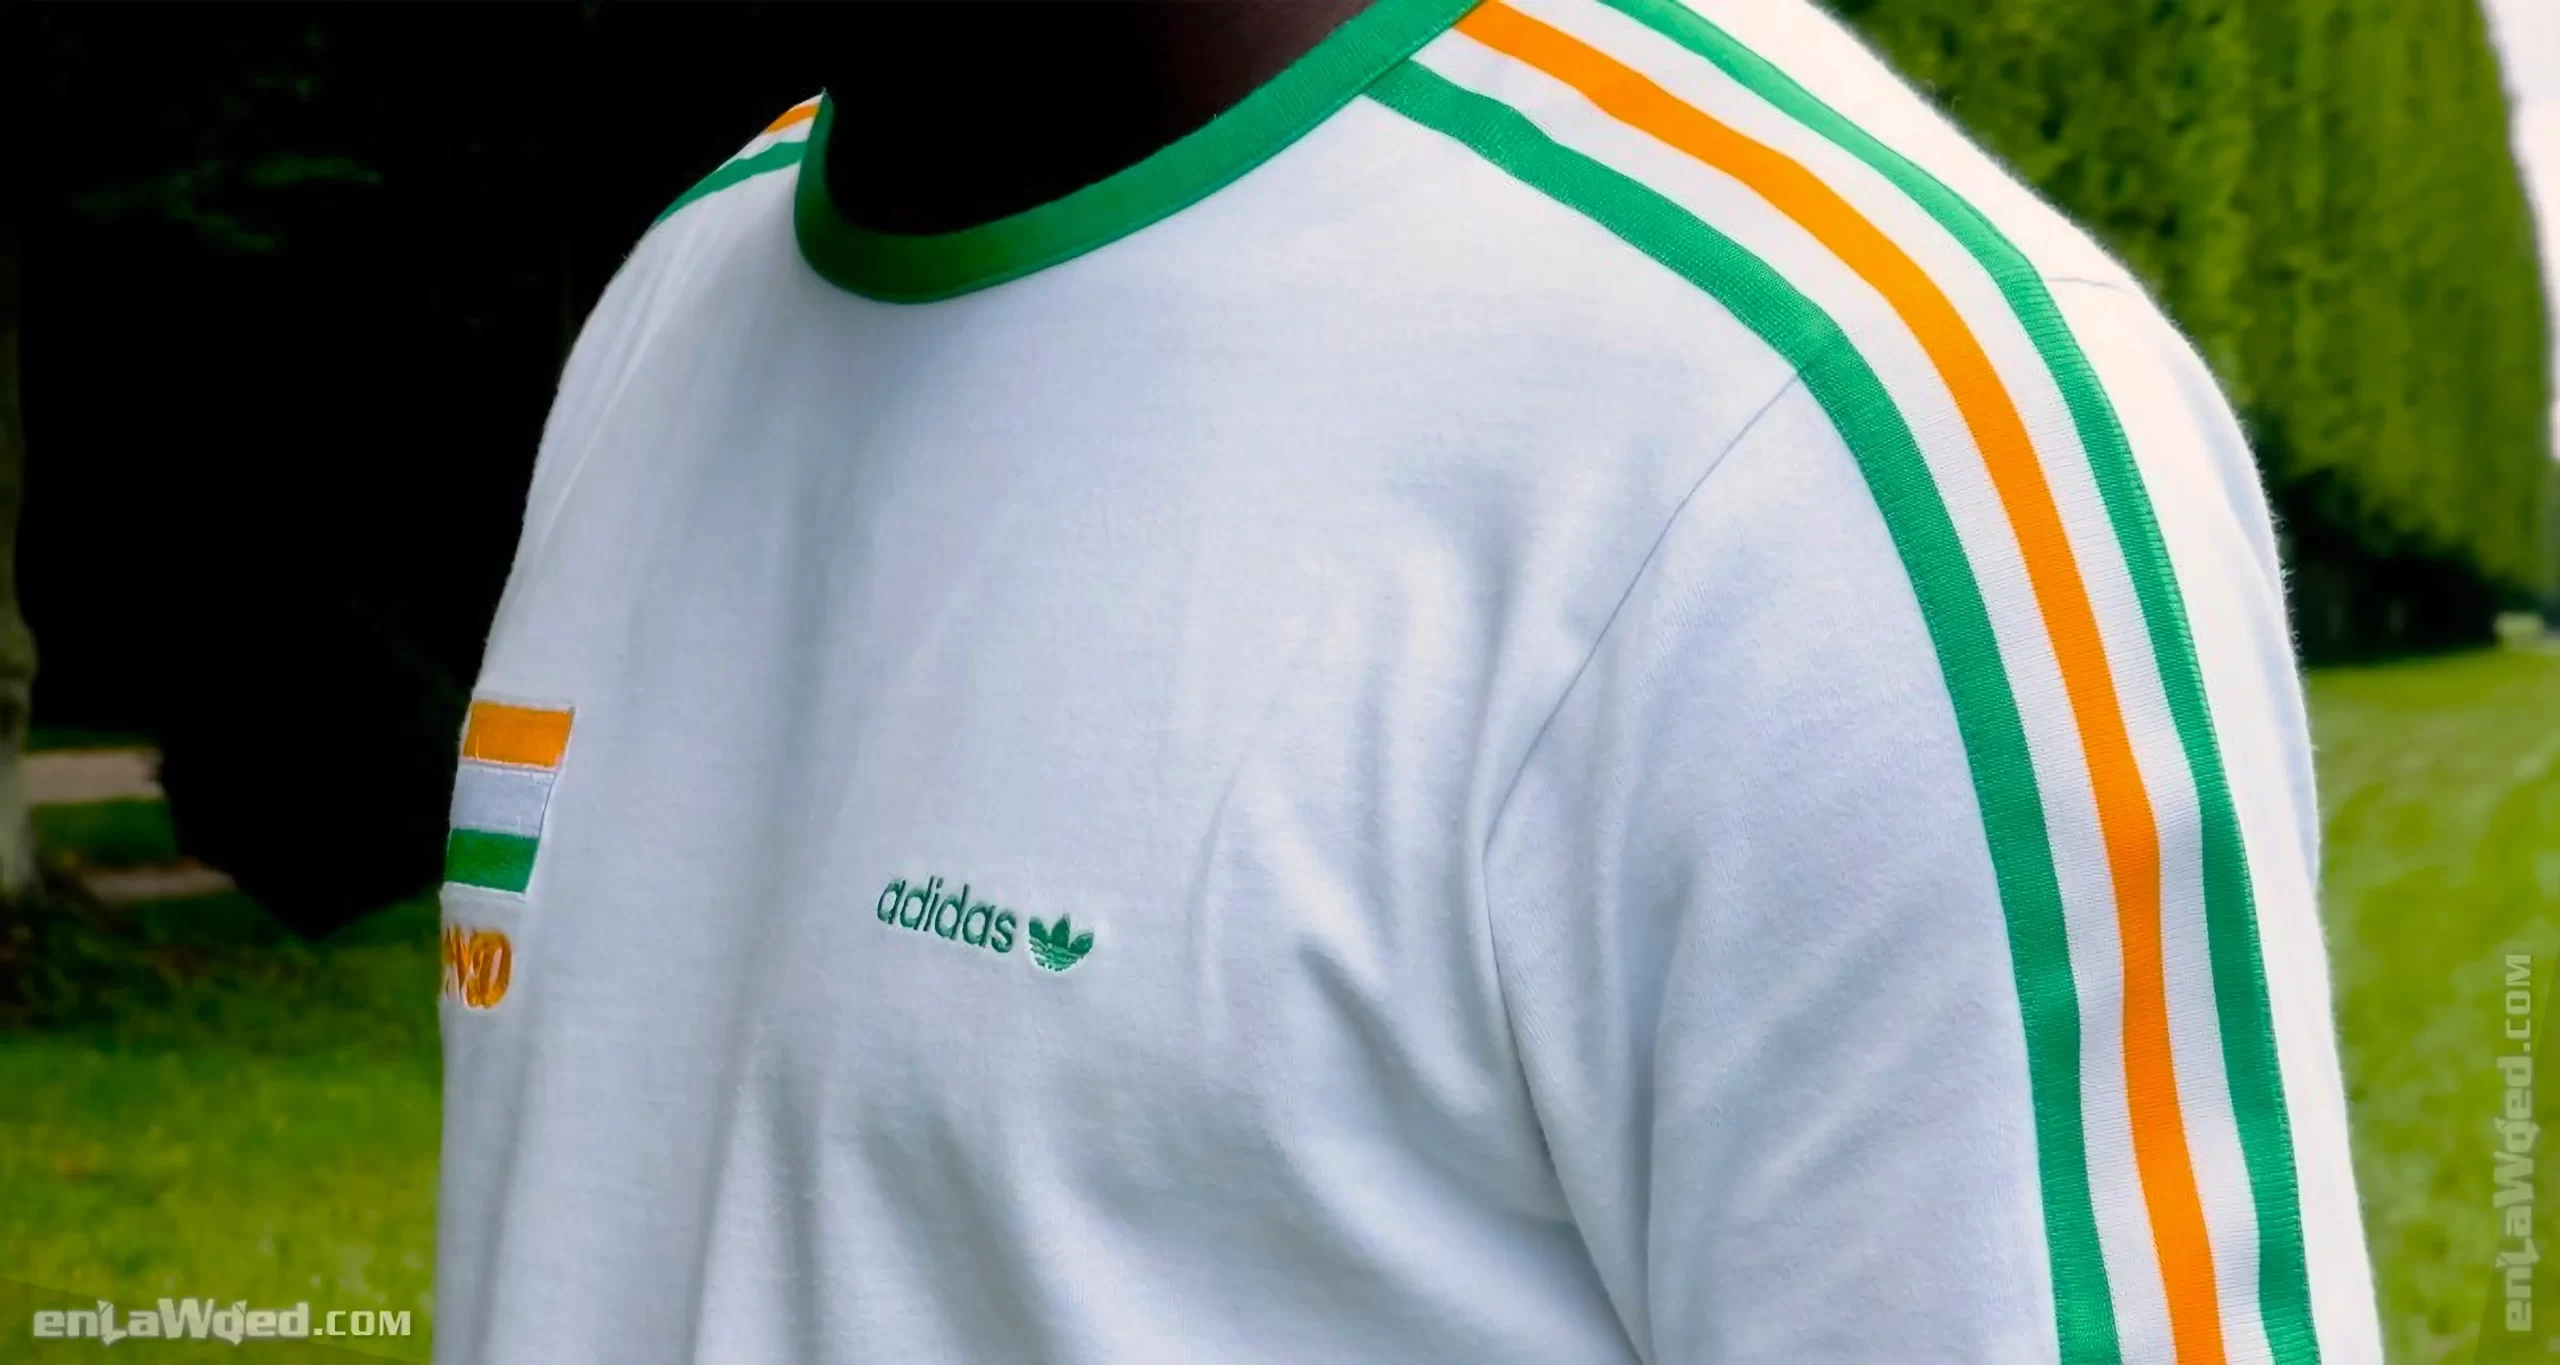 Men’s 2005 India T-Shirt by Adidas Originals: Proven (EnLawded.com file #lmcfvu099g16z1f5blp)